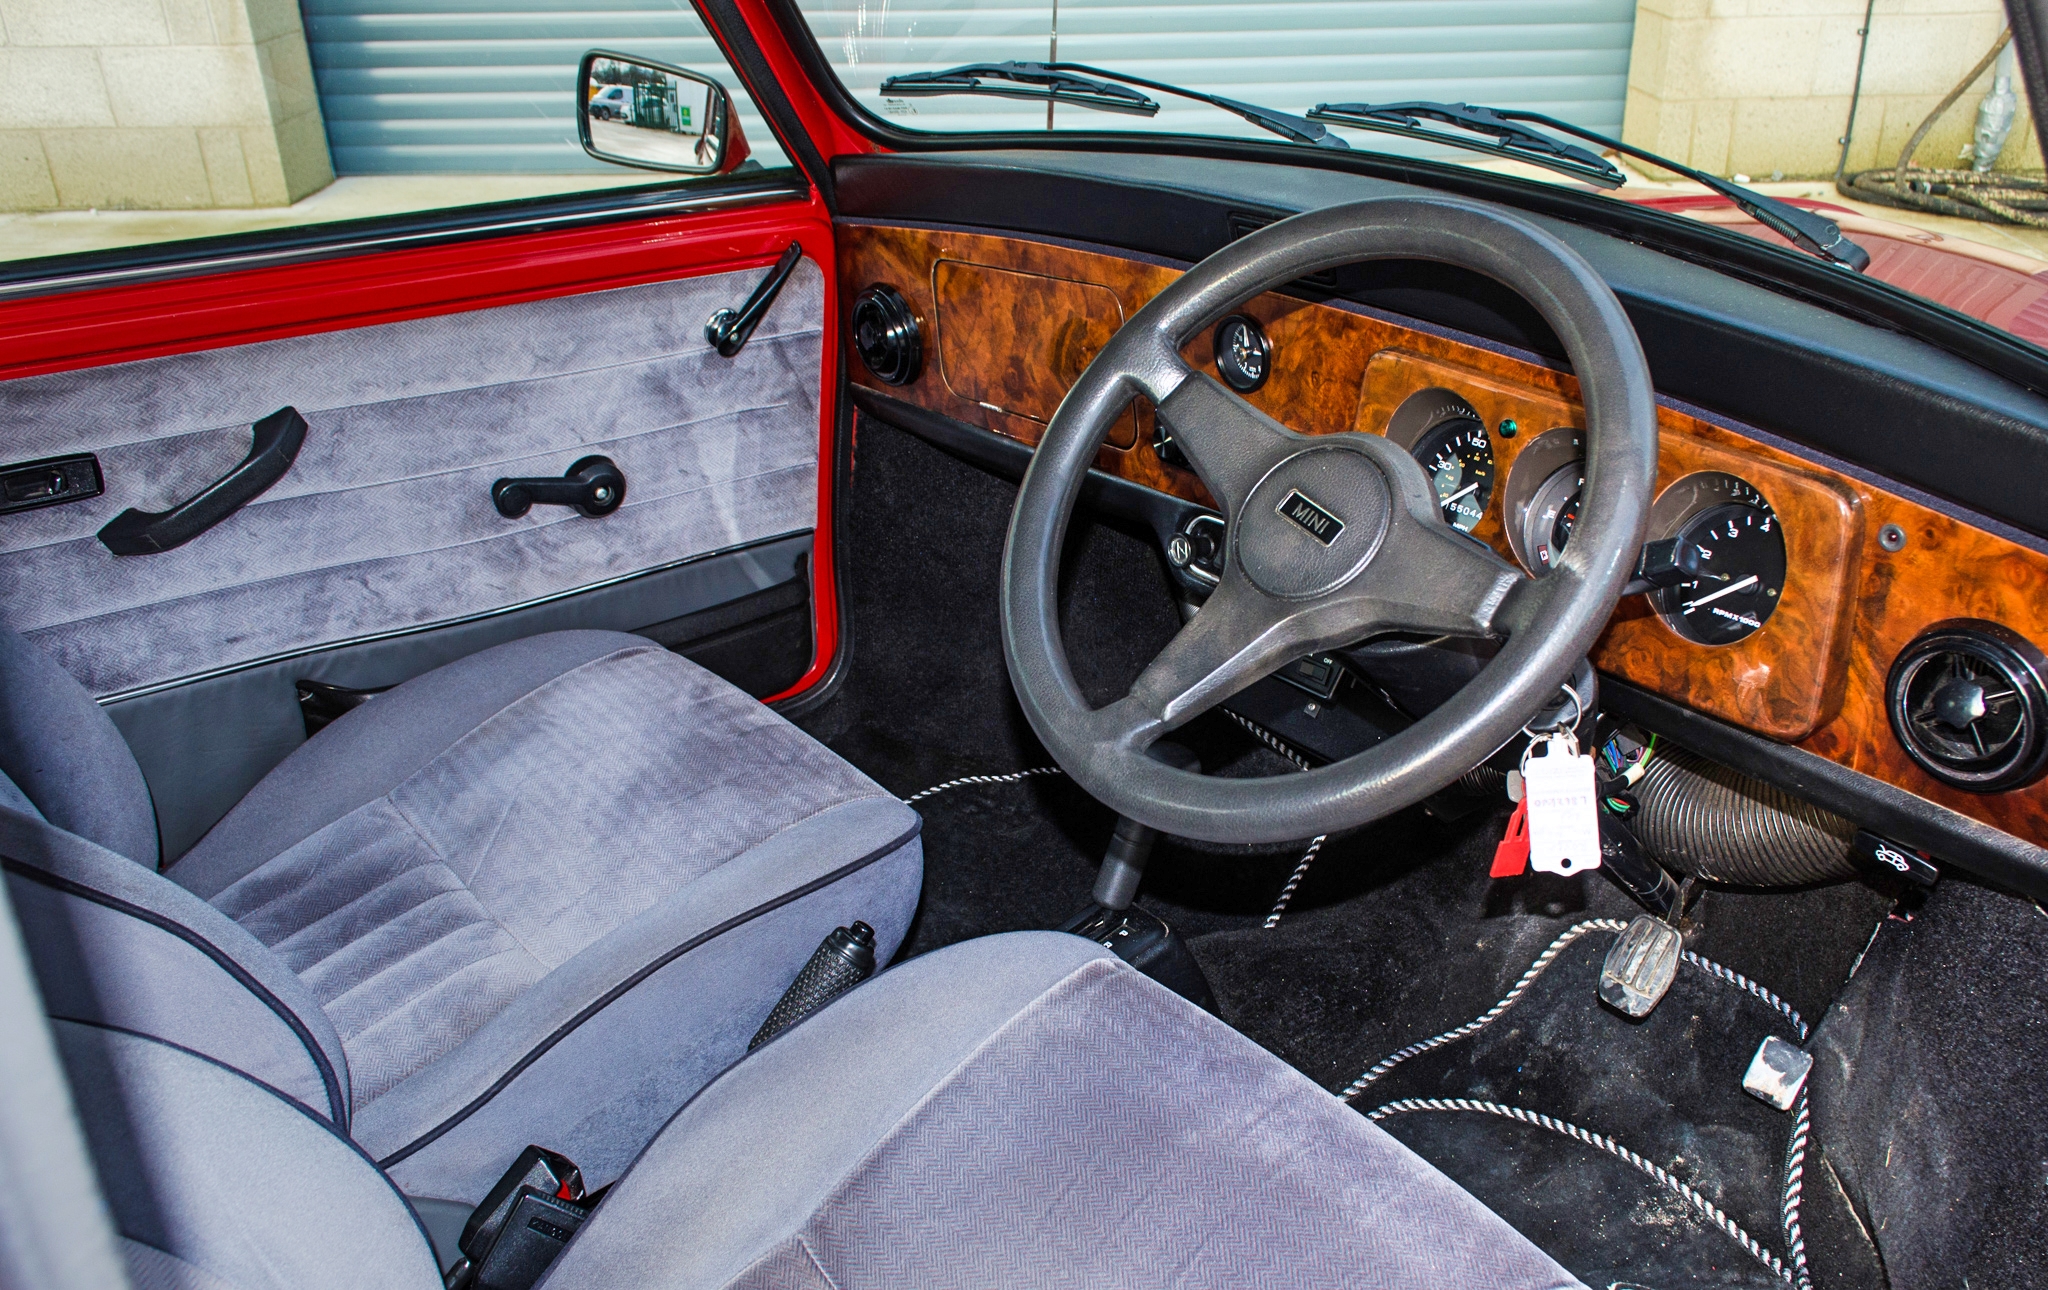 1993 Rover Mini Mayfair 1275cc automatic 2 door saloon - Image 24 of 43